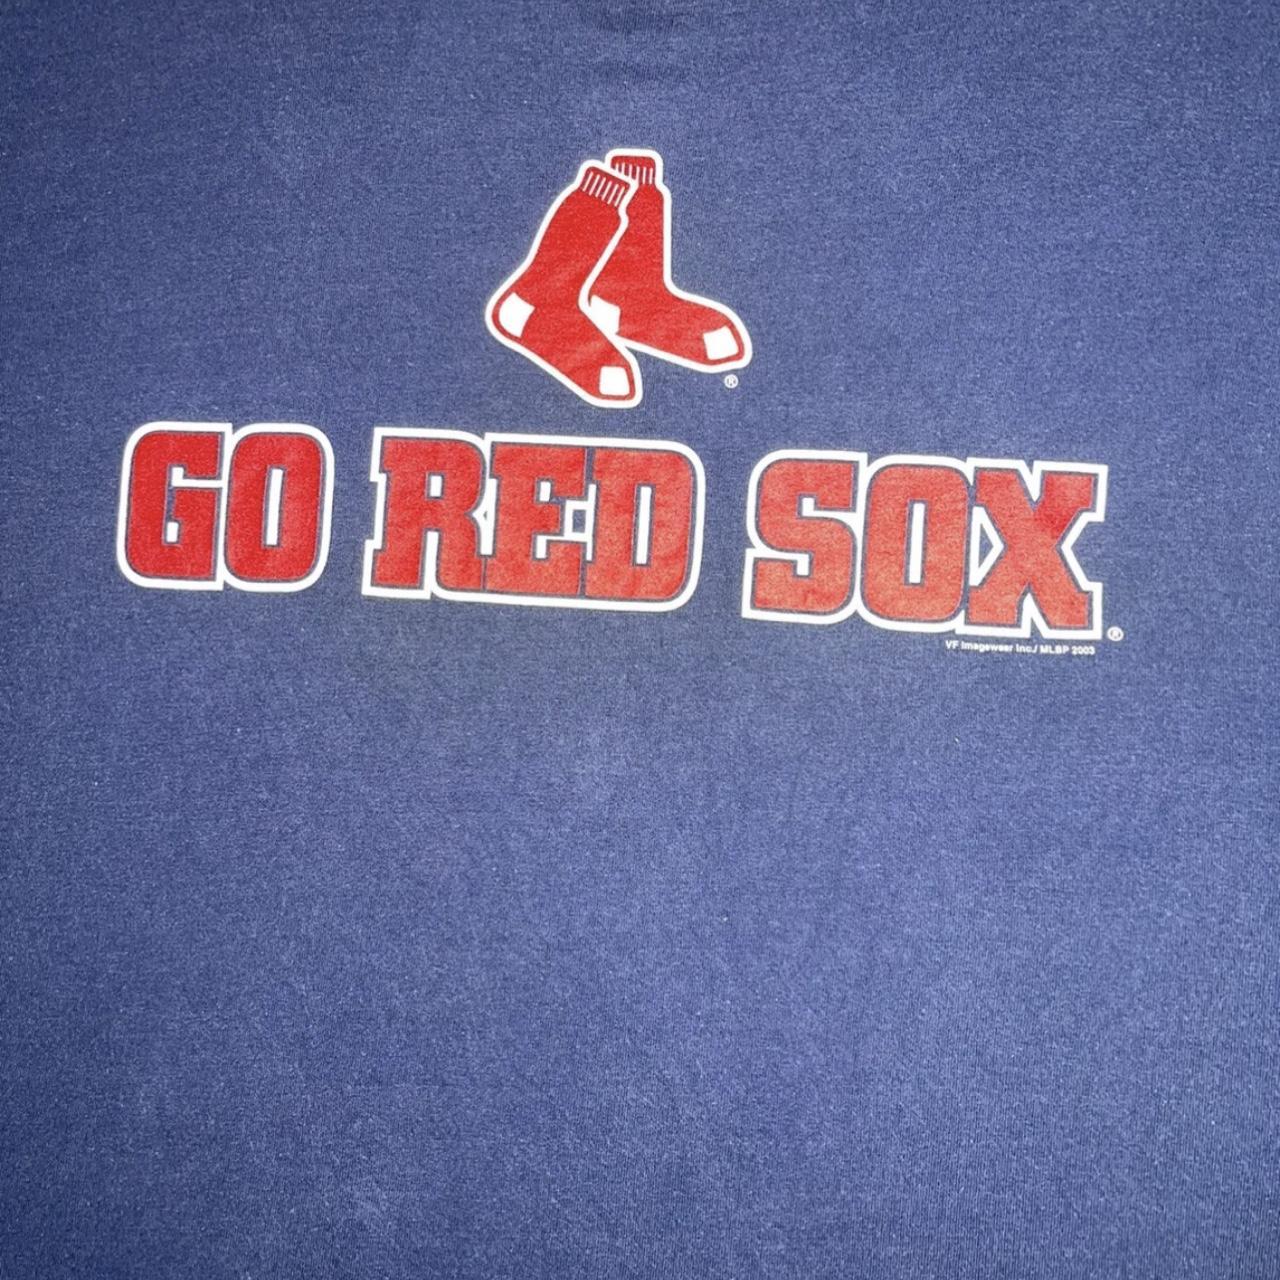 Brand new vintage Red Sox tee #redsox #baseball - Depop